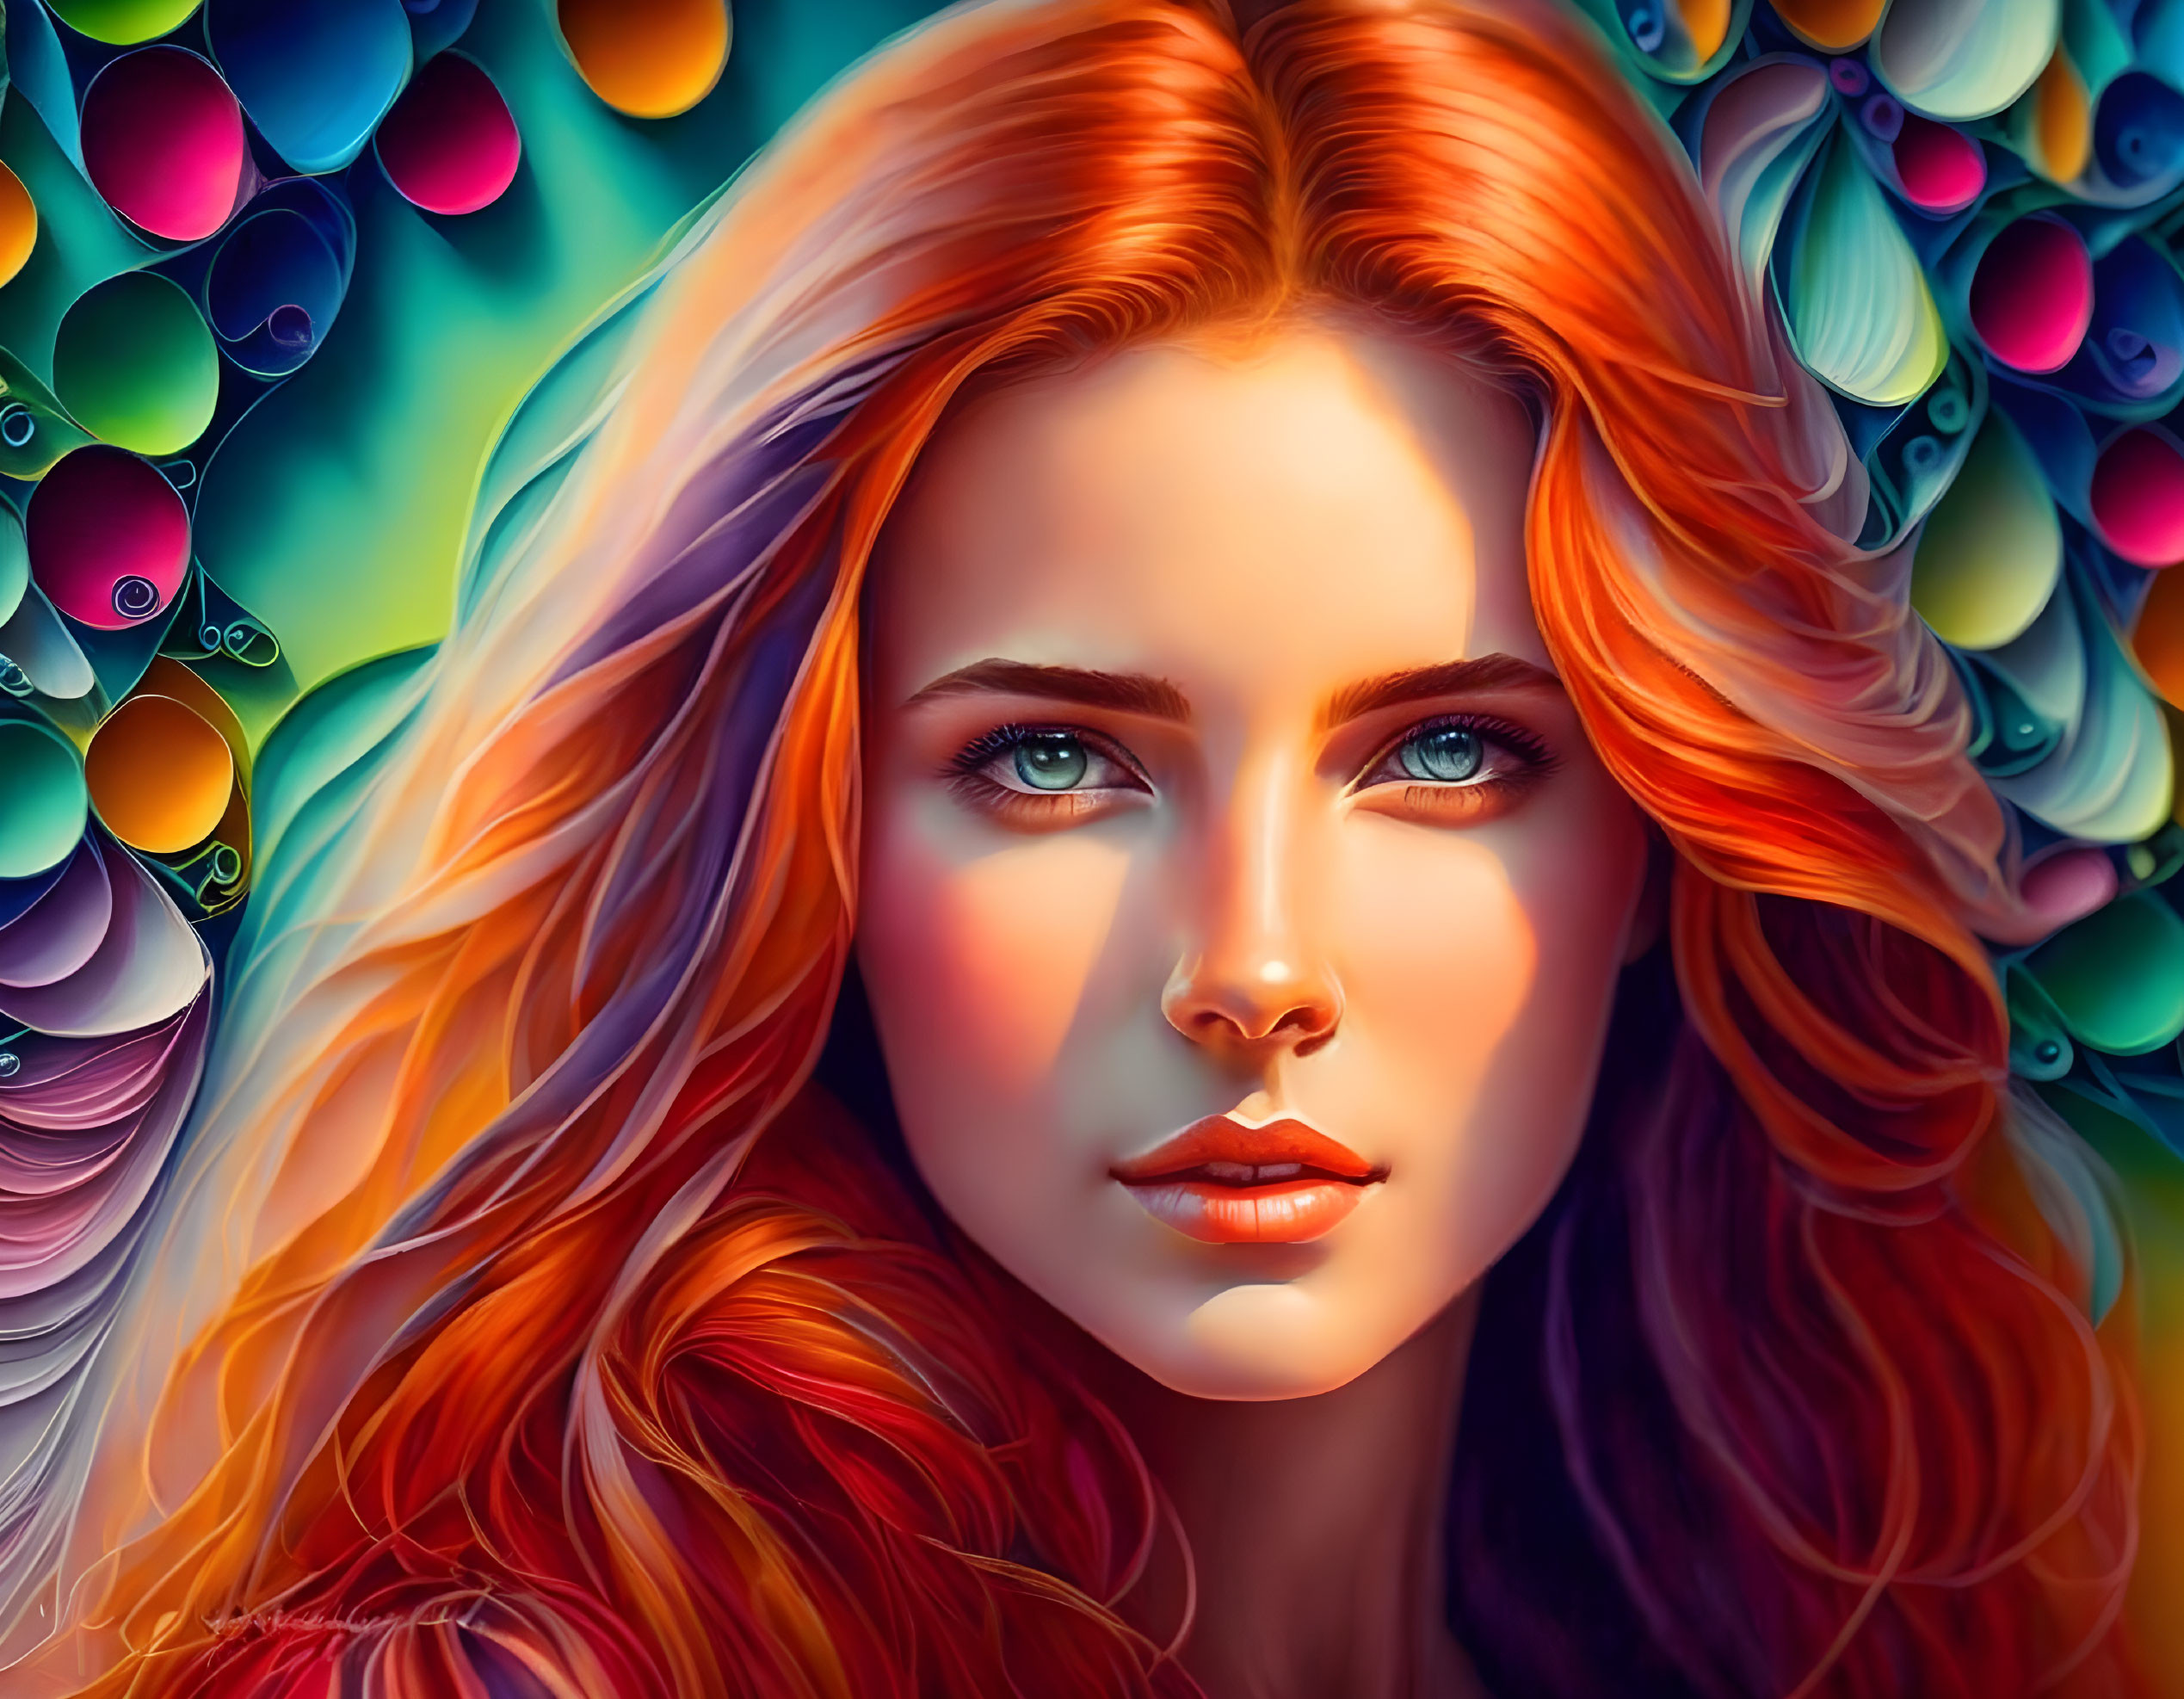 Aislinnl redhead woman